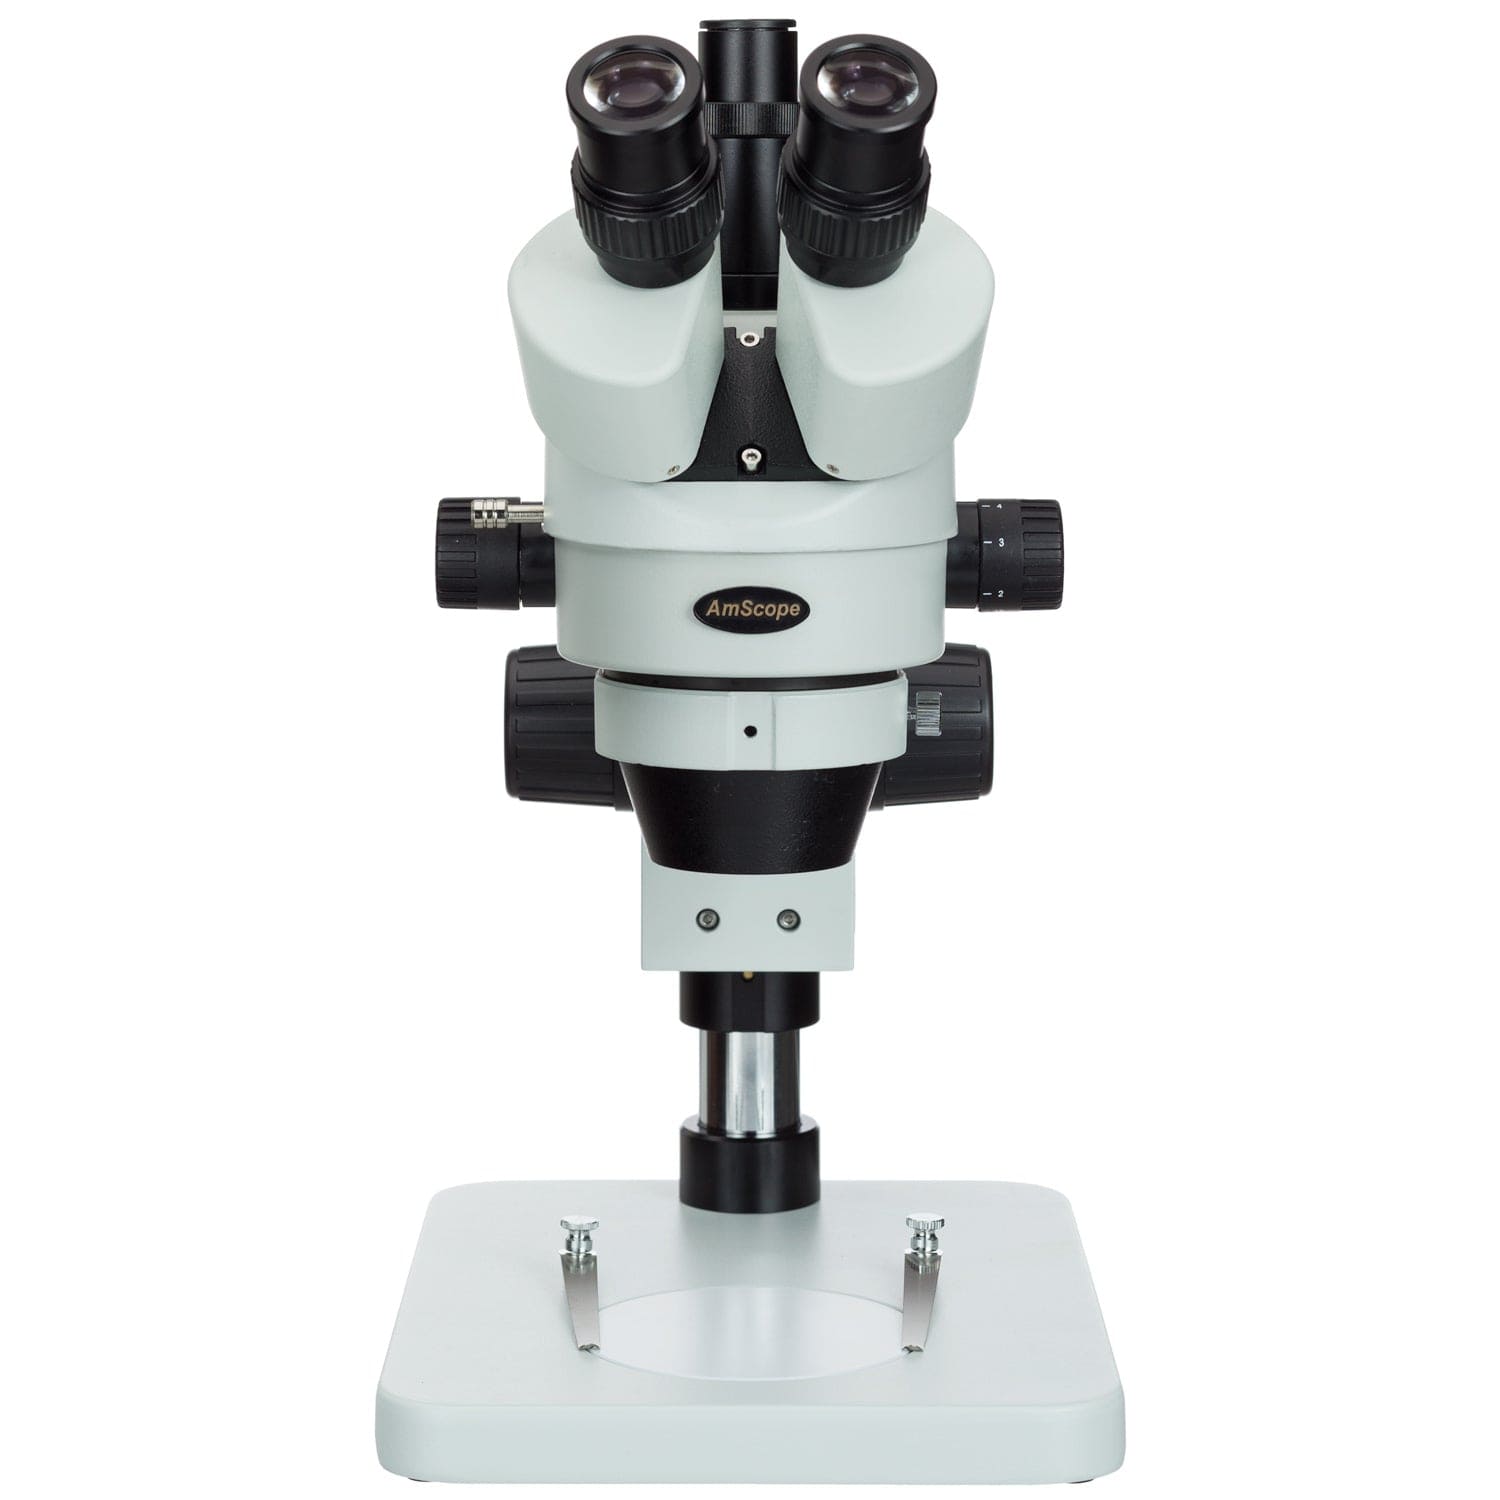  AmScope SM-4TZ-144A Professional Trinocular Stereo Zoom  Microscope & Hakko 611-2 Dual Solder Reel Stand, Black : Electronics